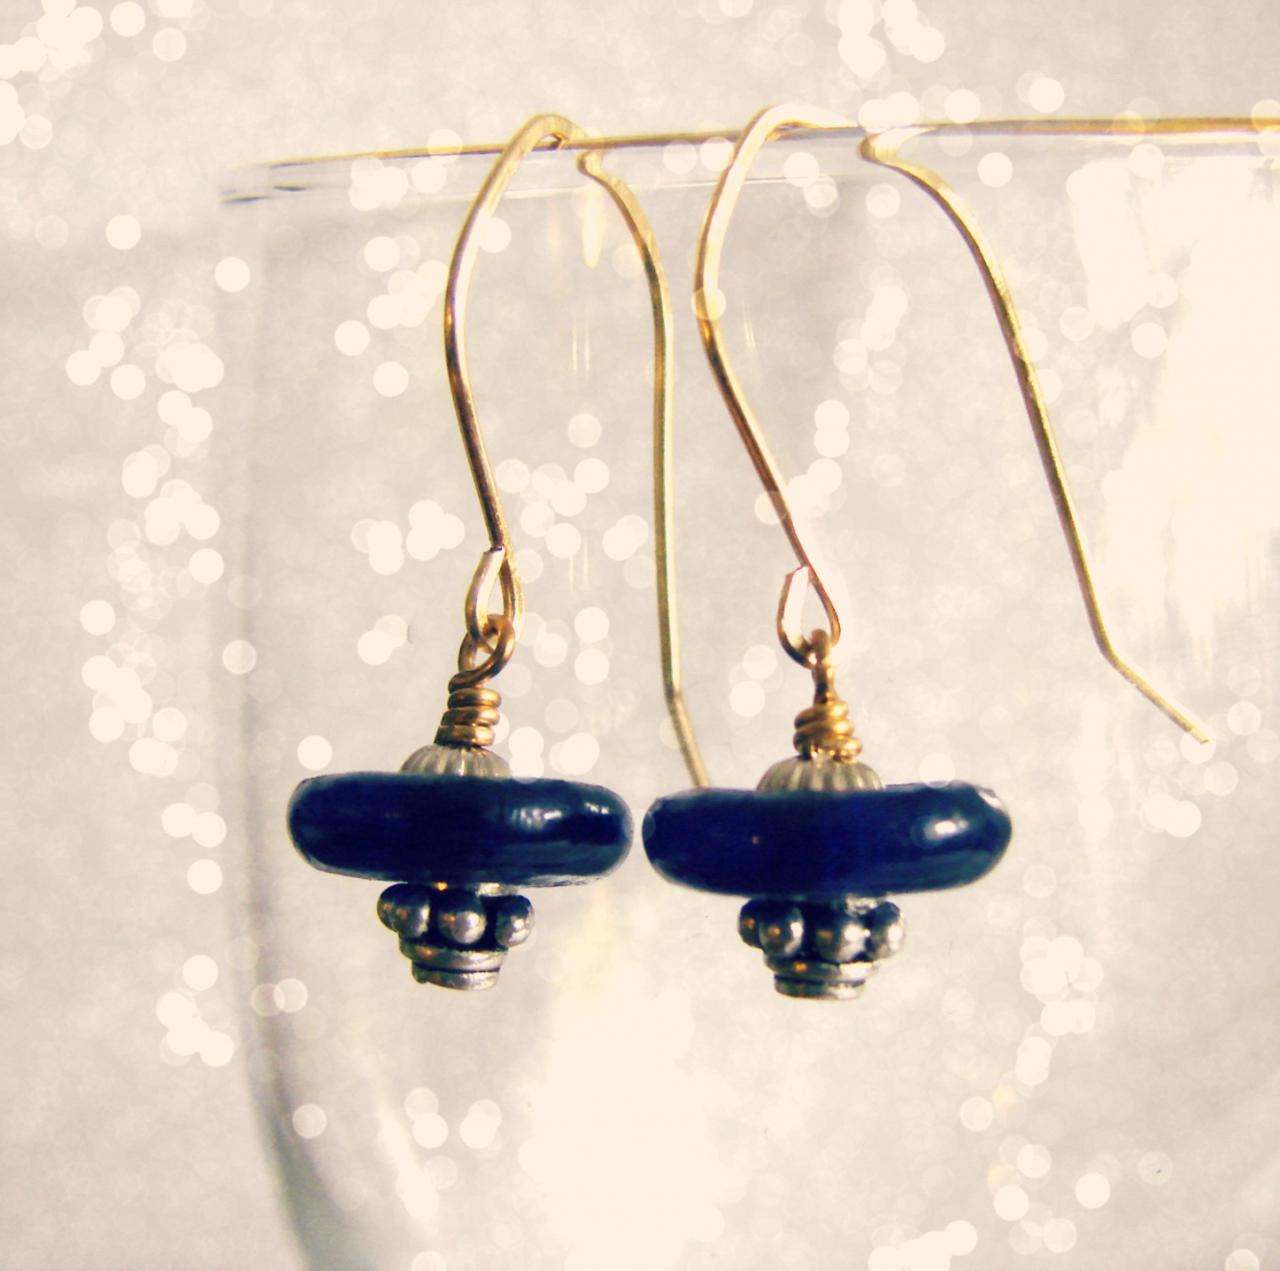 Vintage Blue Glass Space Earrings. Handmade Jewelry.